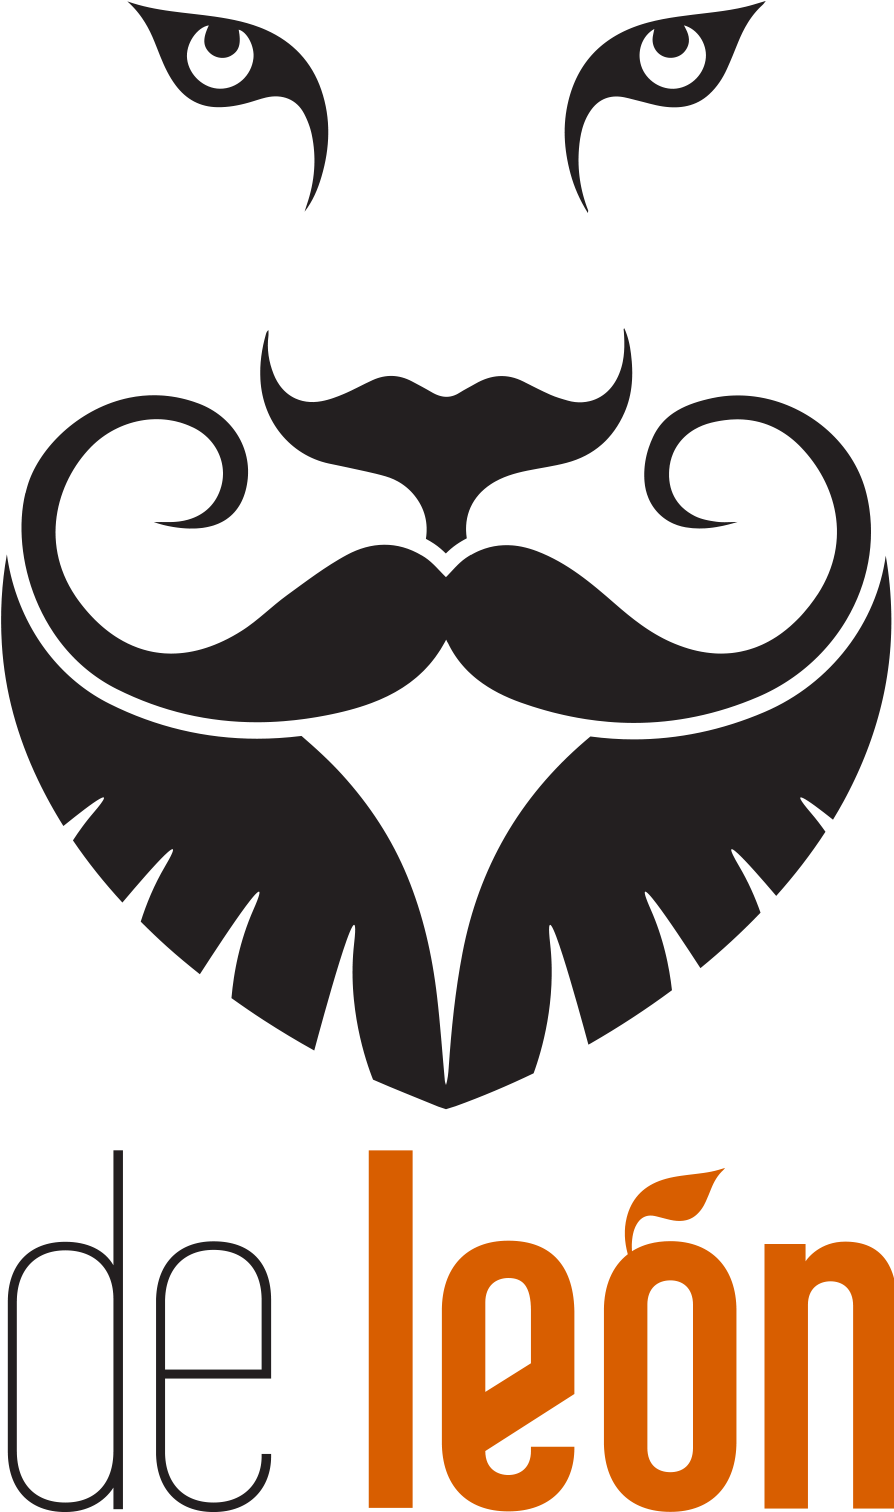 Deleon-finalnew2 - De Leon Logo (897x1733)